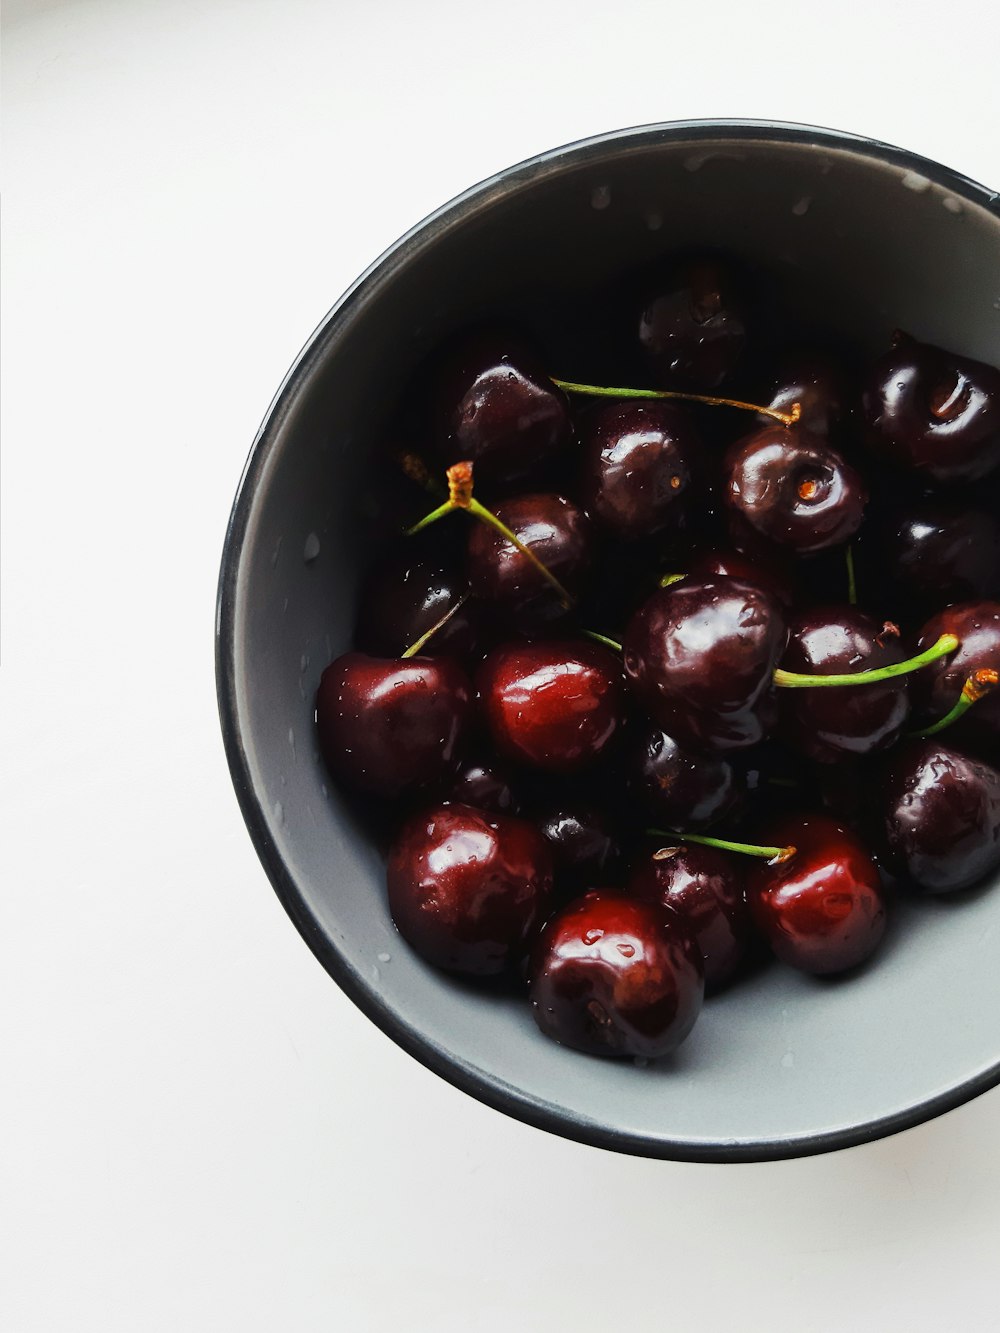 red cherries in bowl